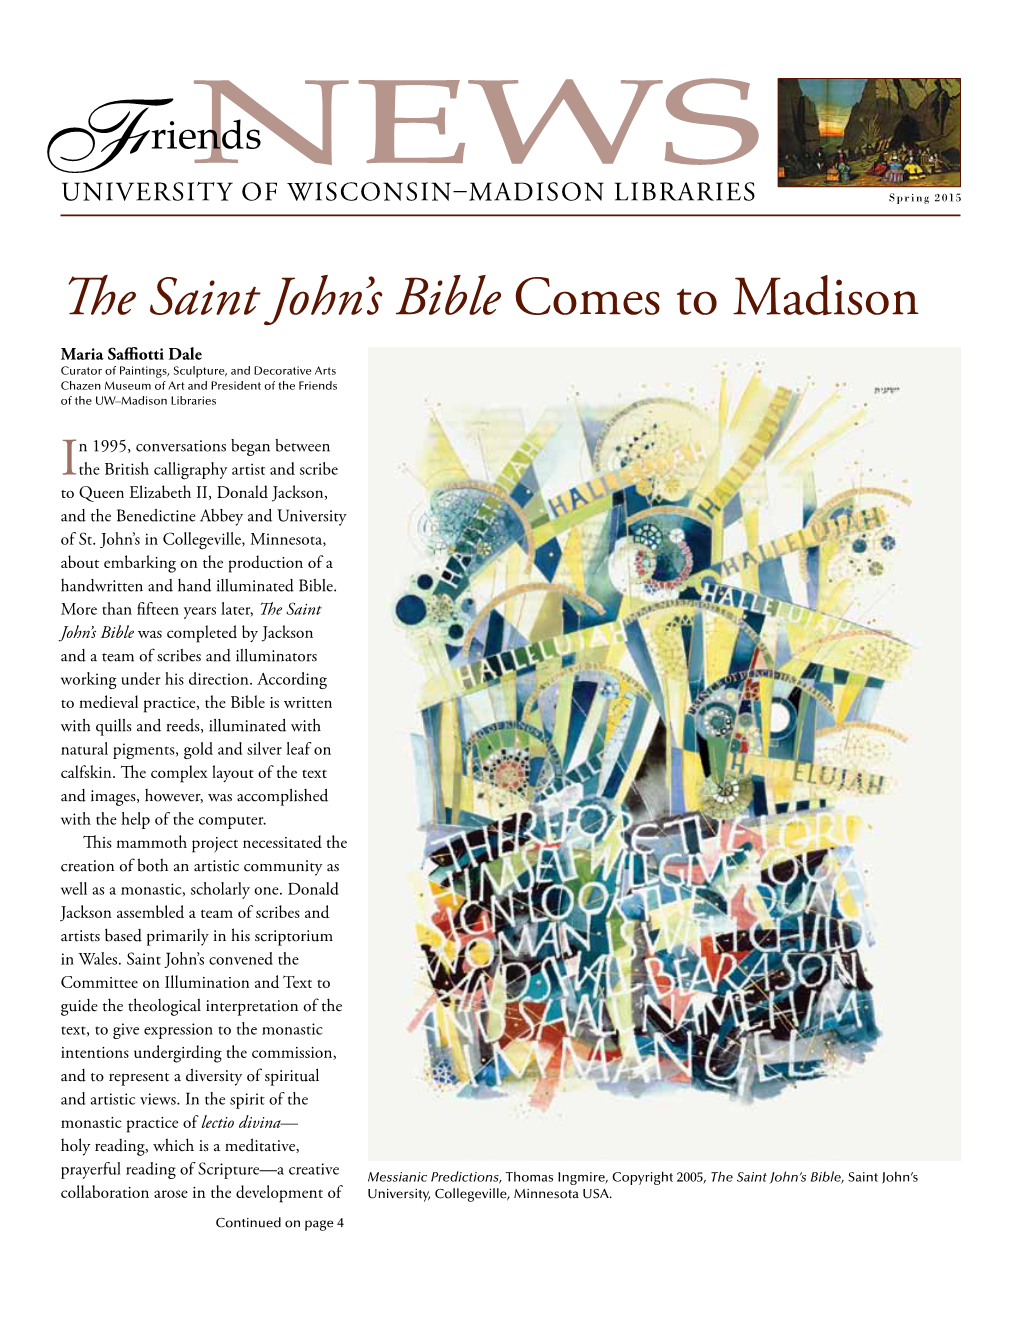 The Saint John's Bible Comes to Madison